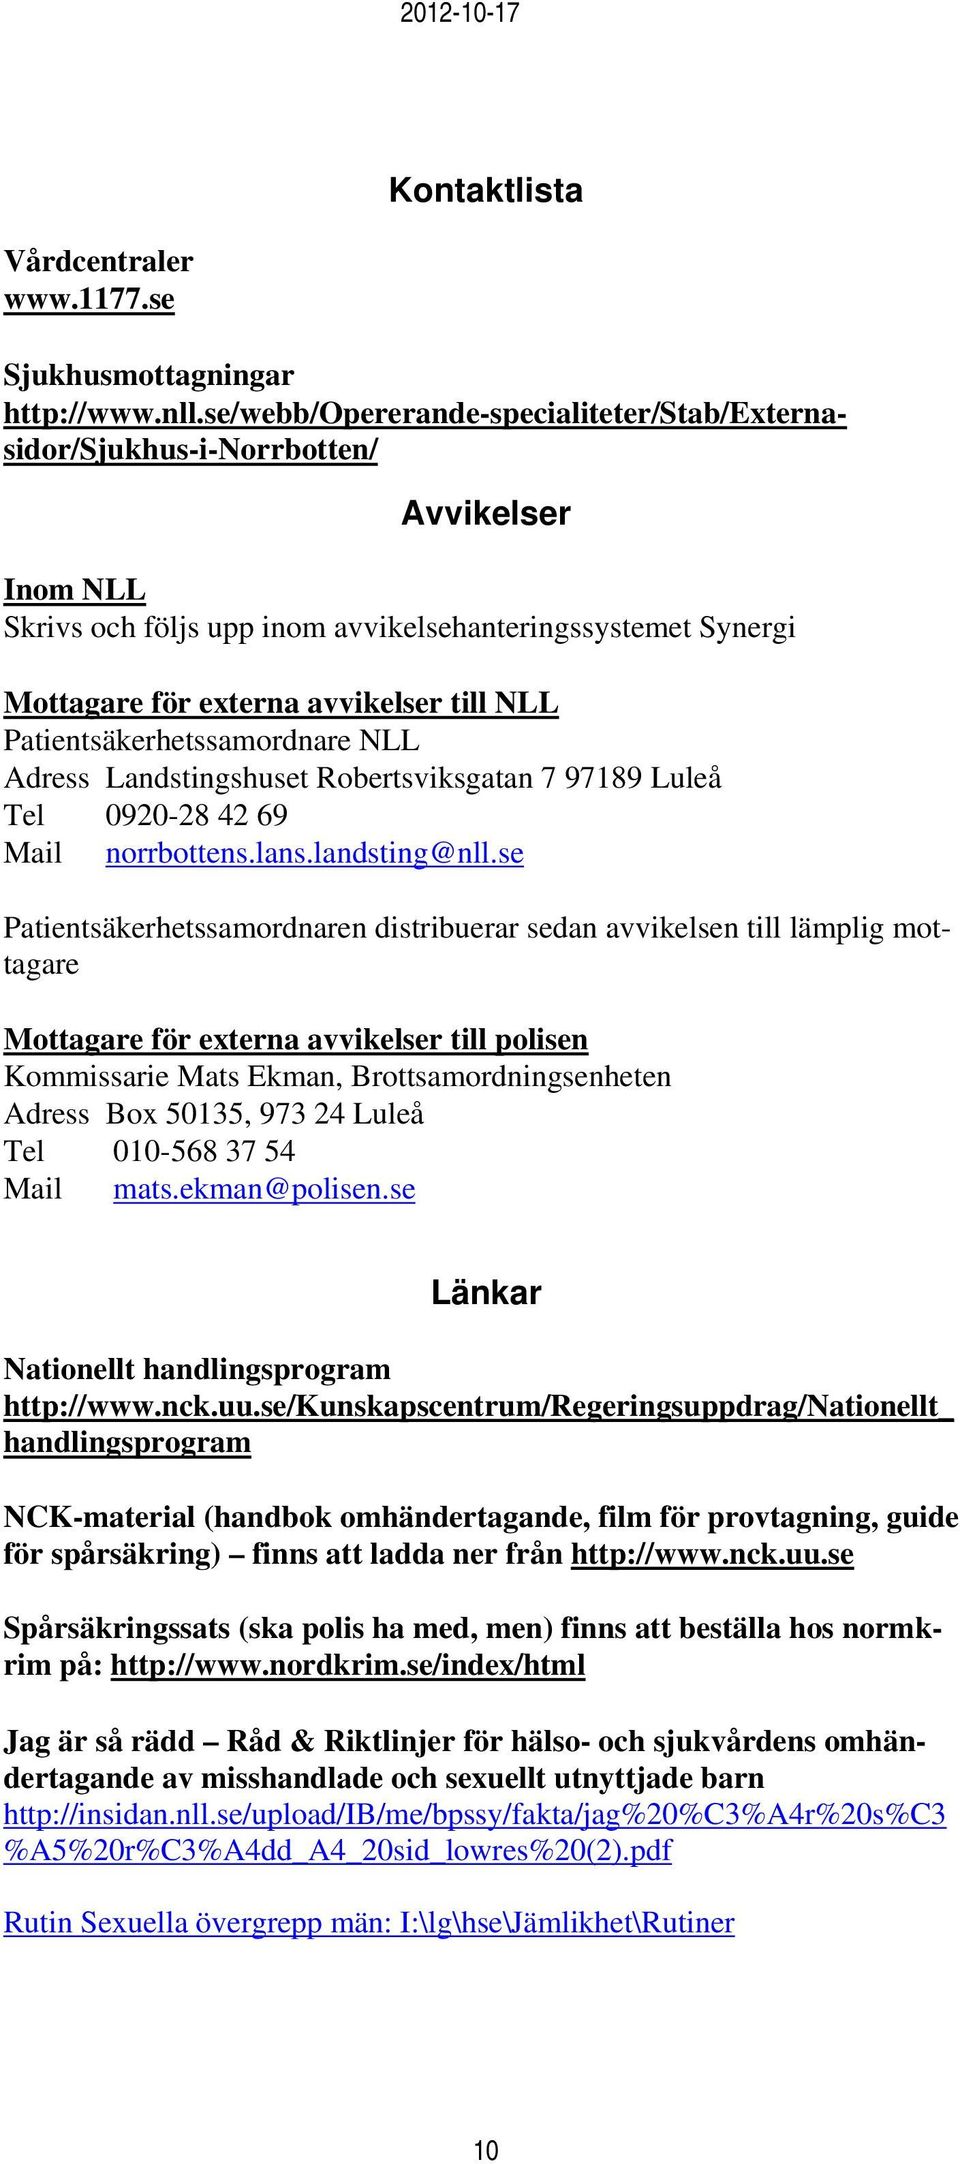 Patientsäkerhetssamordnare NLL Adress Landstingshuset Robertsviksgatan 7 97189 Luleå Tel 0920-28 42 69 Mail norrbottens.lans.landsting@nll.